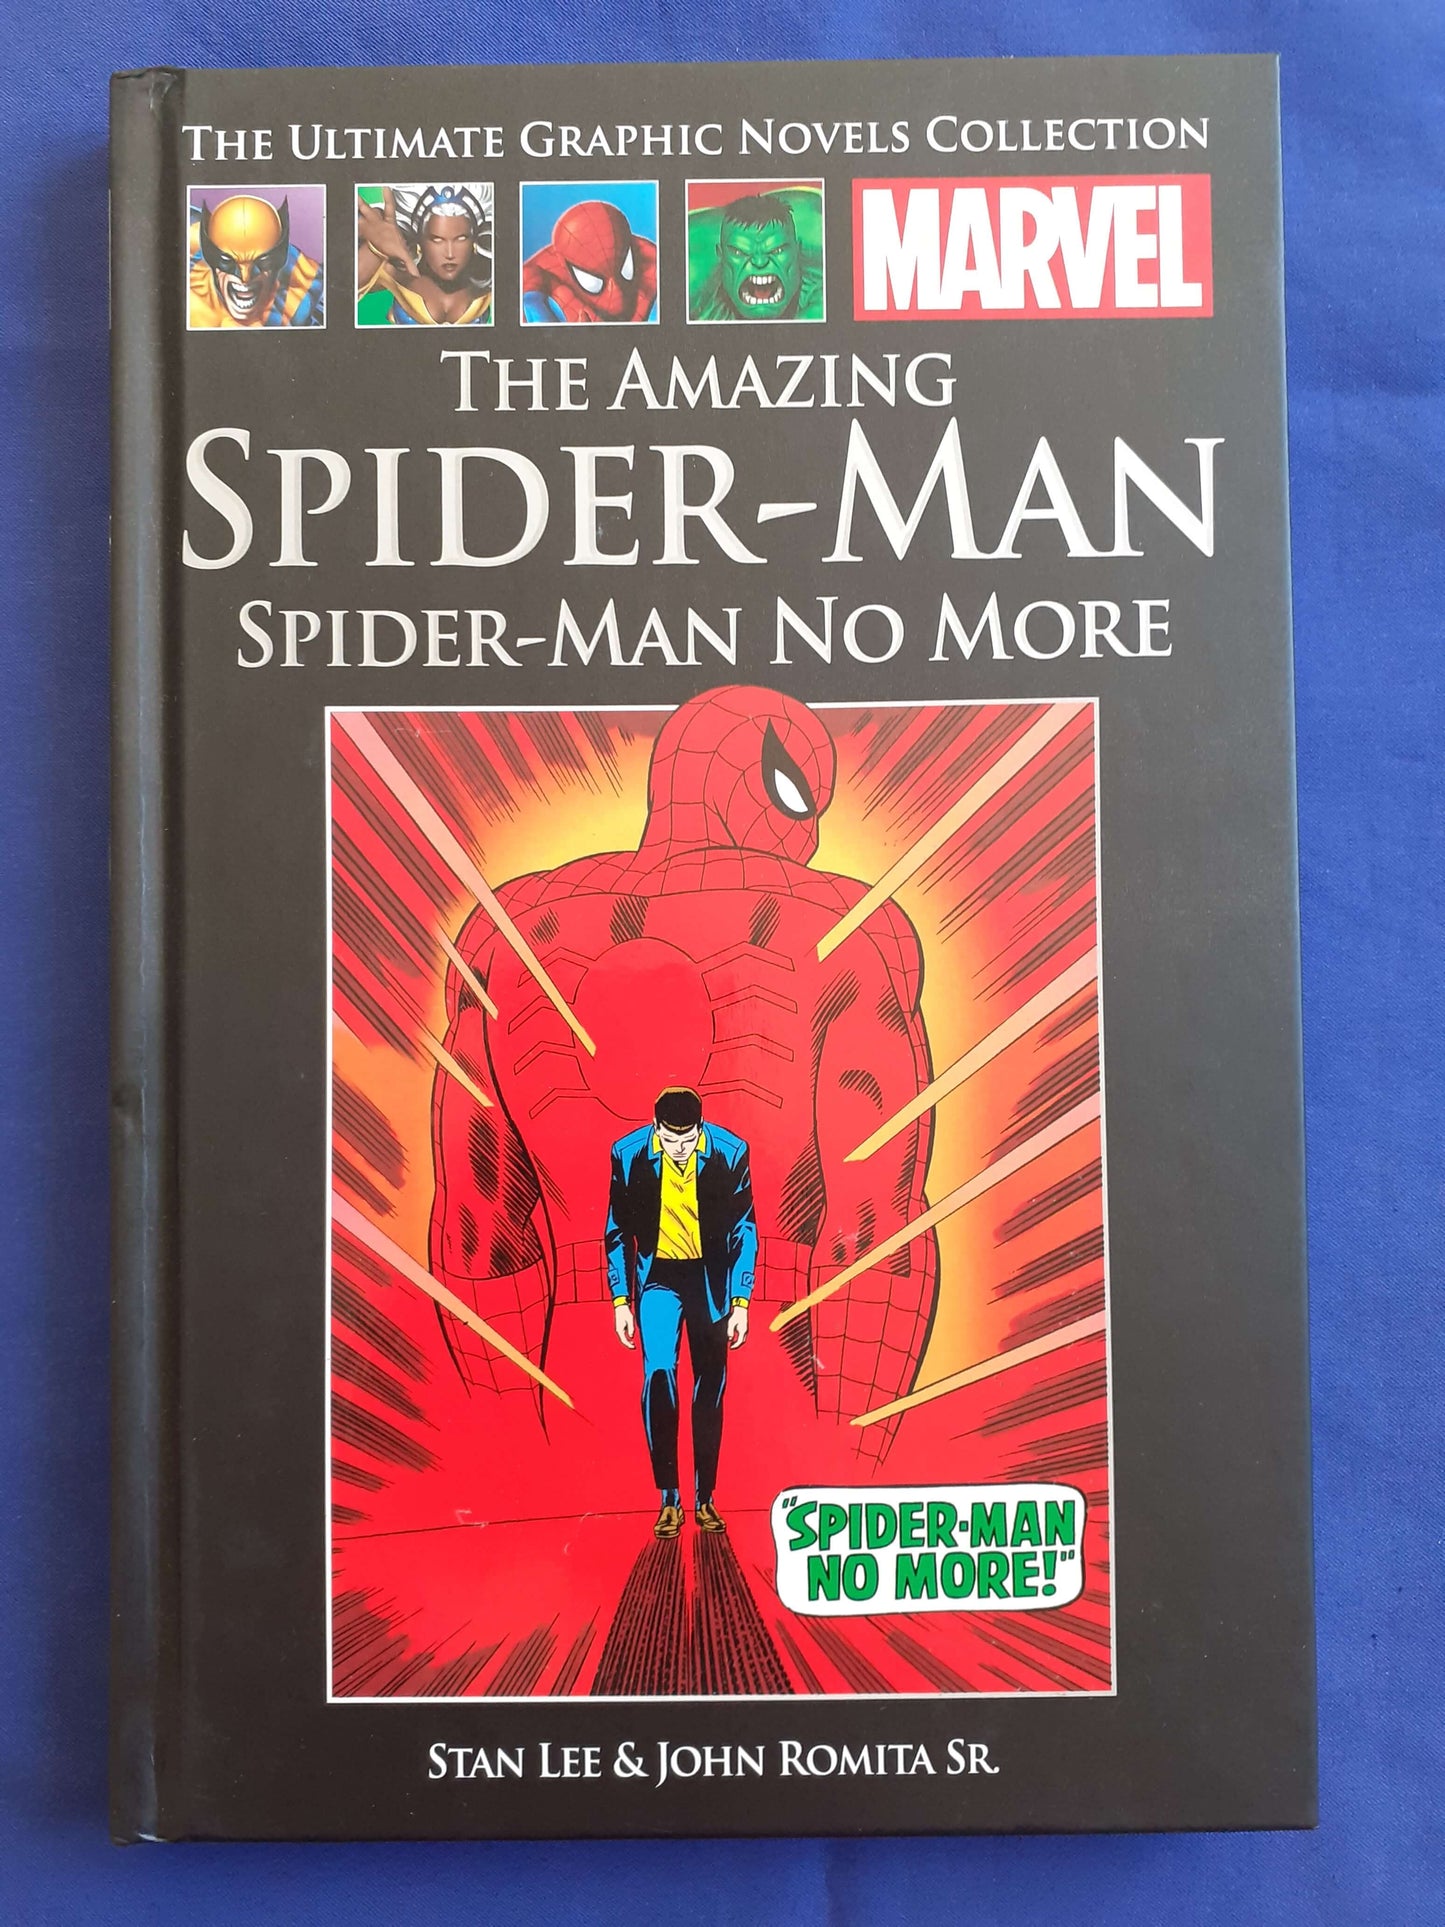 amazing spider man, graphic novel, marvel comics, marvel graphic novels, Marvel Super Heroes, marvel ultimate graphic collection, spider man, spiderman - Best Books